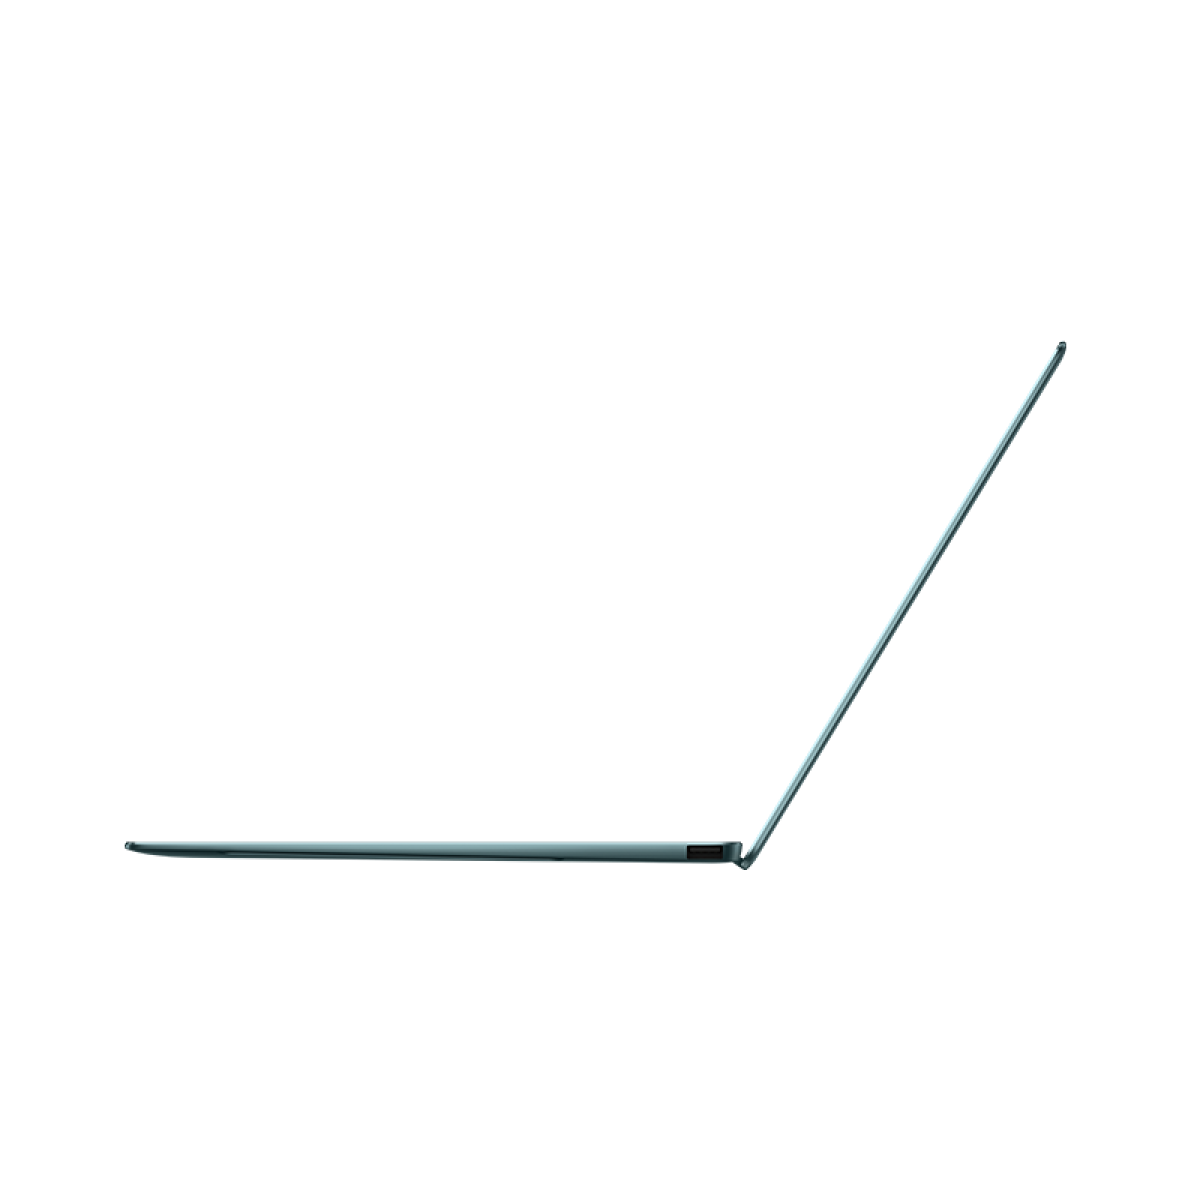 HUAWEI MateBook X Pro 2021 Laptop (Intel Core i5-1135G7, 16GB, 512GB SSD, 13.9